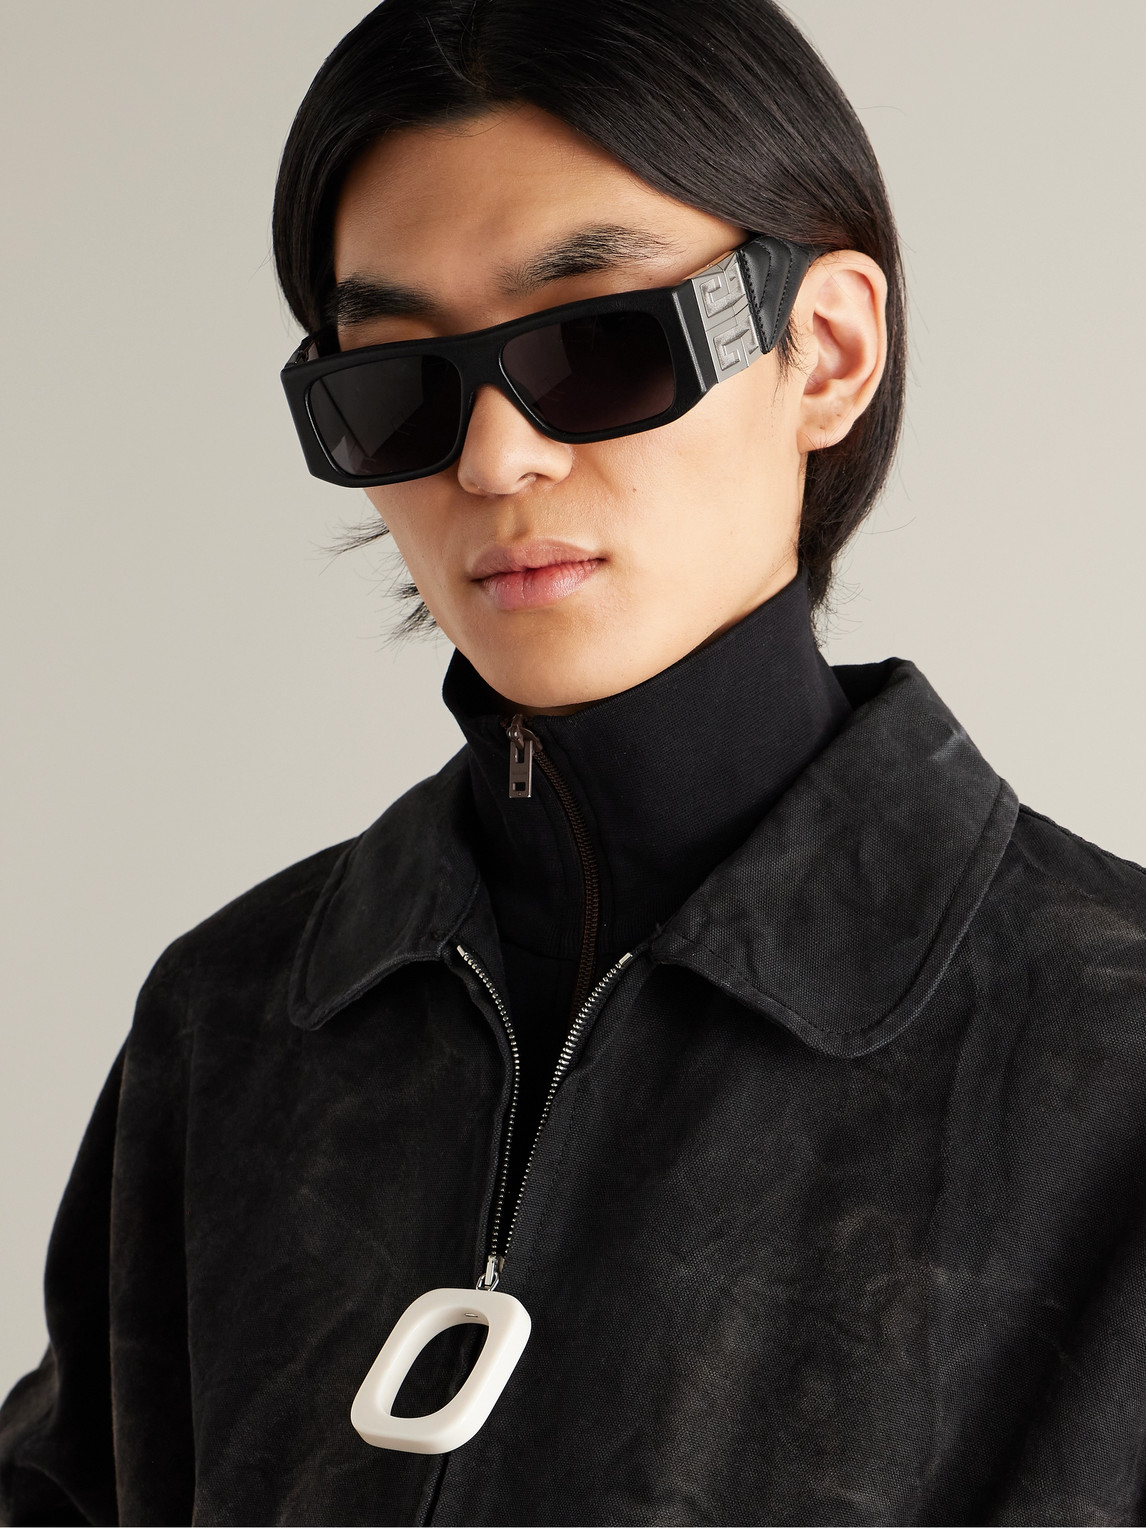 Loewe Men's 56mm Oversized Square Sunglasses Shiny Black Violet